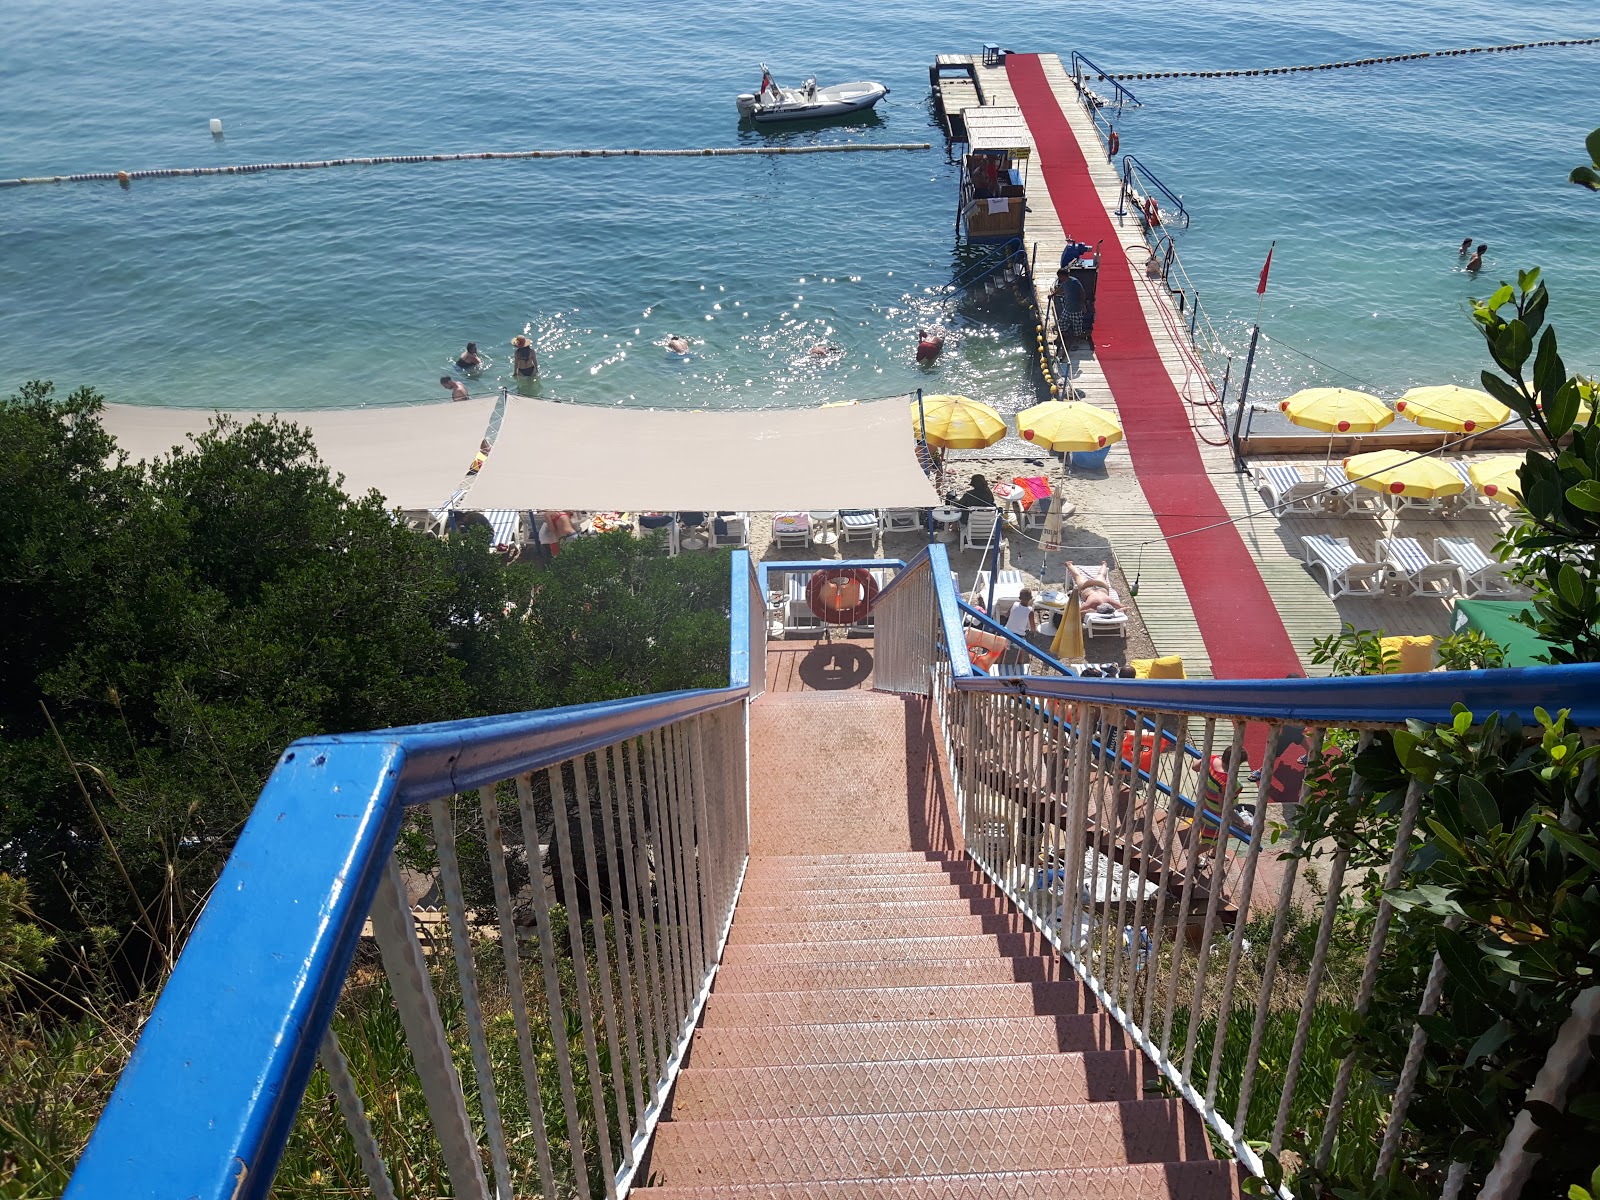 Photo of Halik Koyu Aile Plaji - popular place among relax connoisseurs